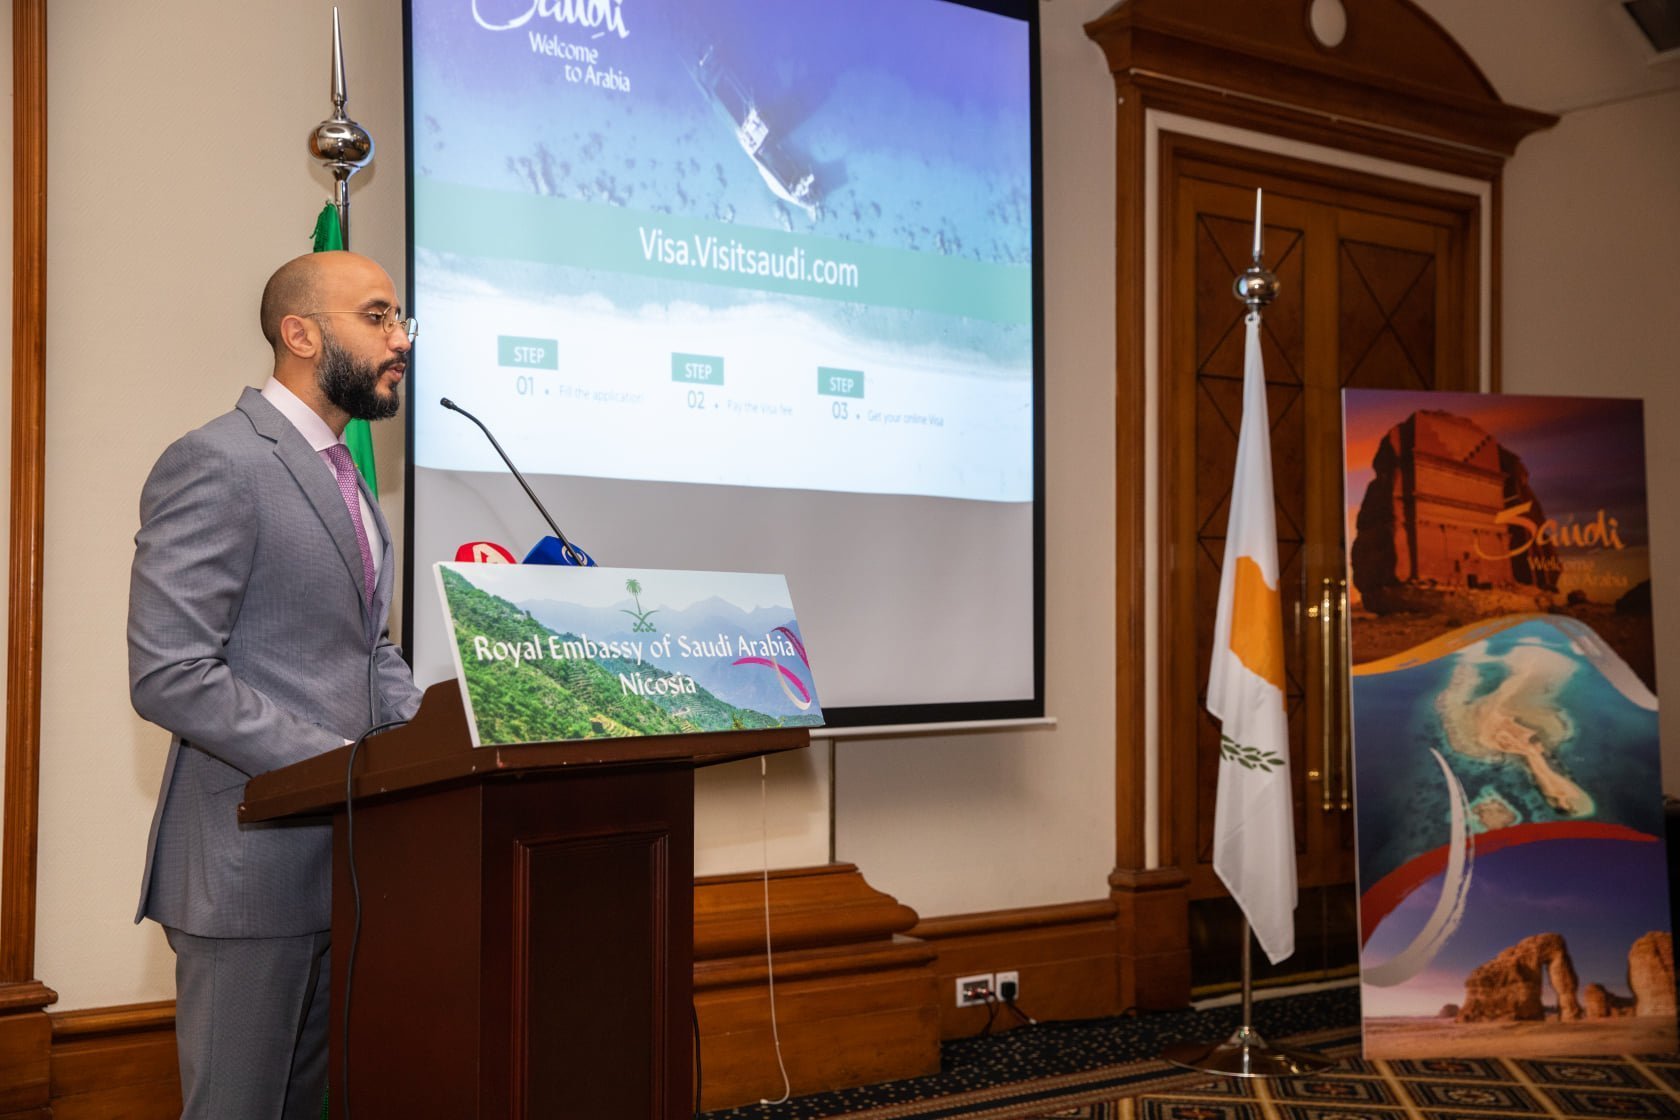 Embassy of Saudi Arabia - Press Event for e-visa